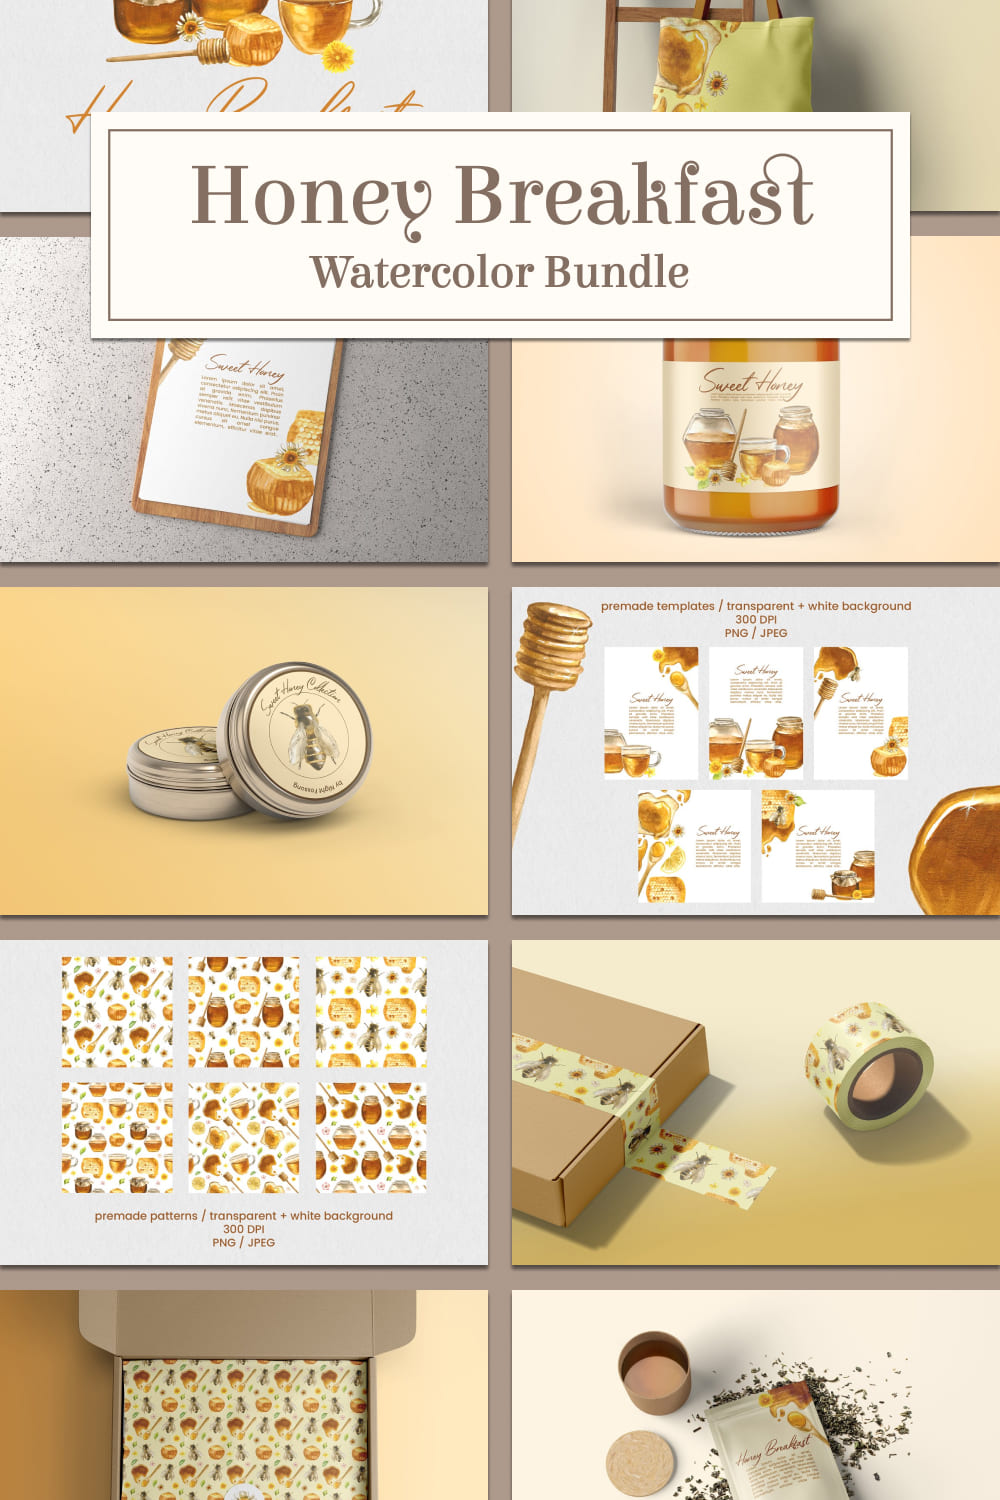 Honey breakfast watercolor bundle - pinterest image preview.